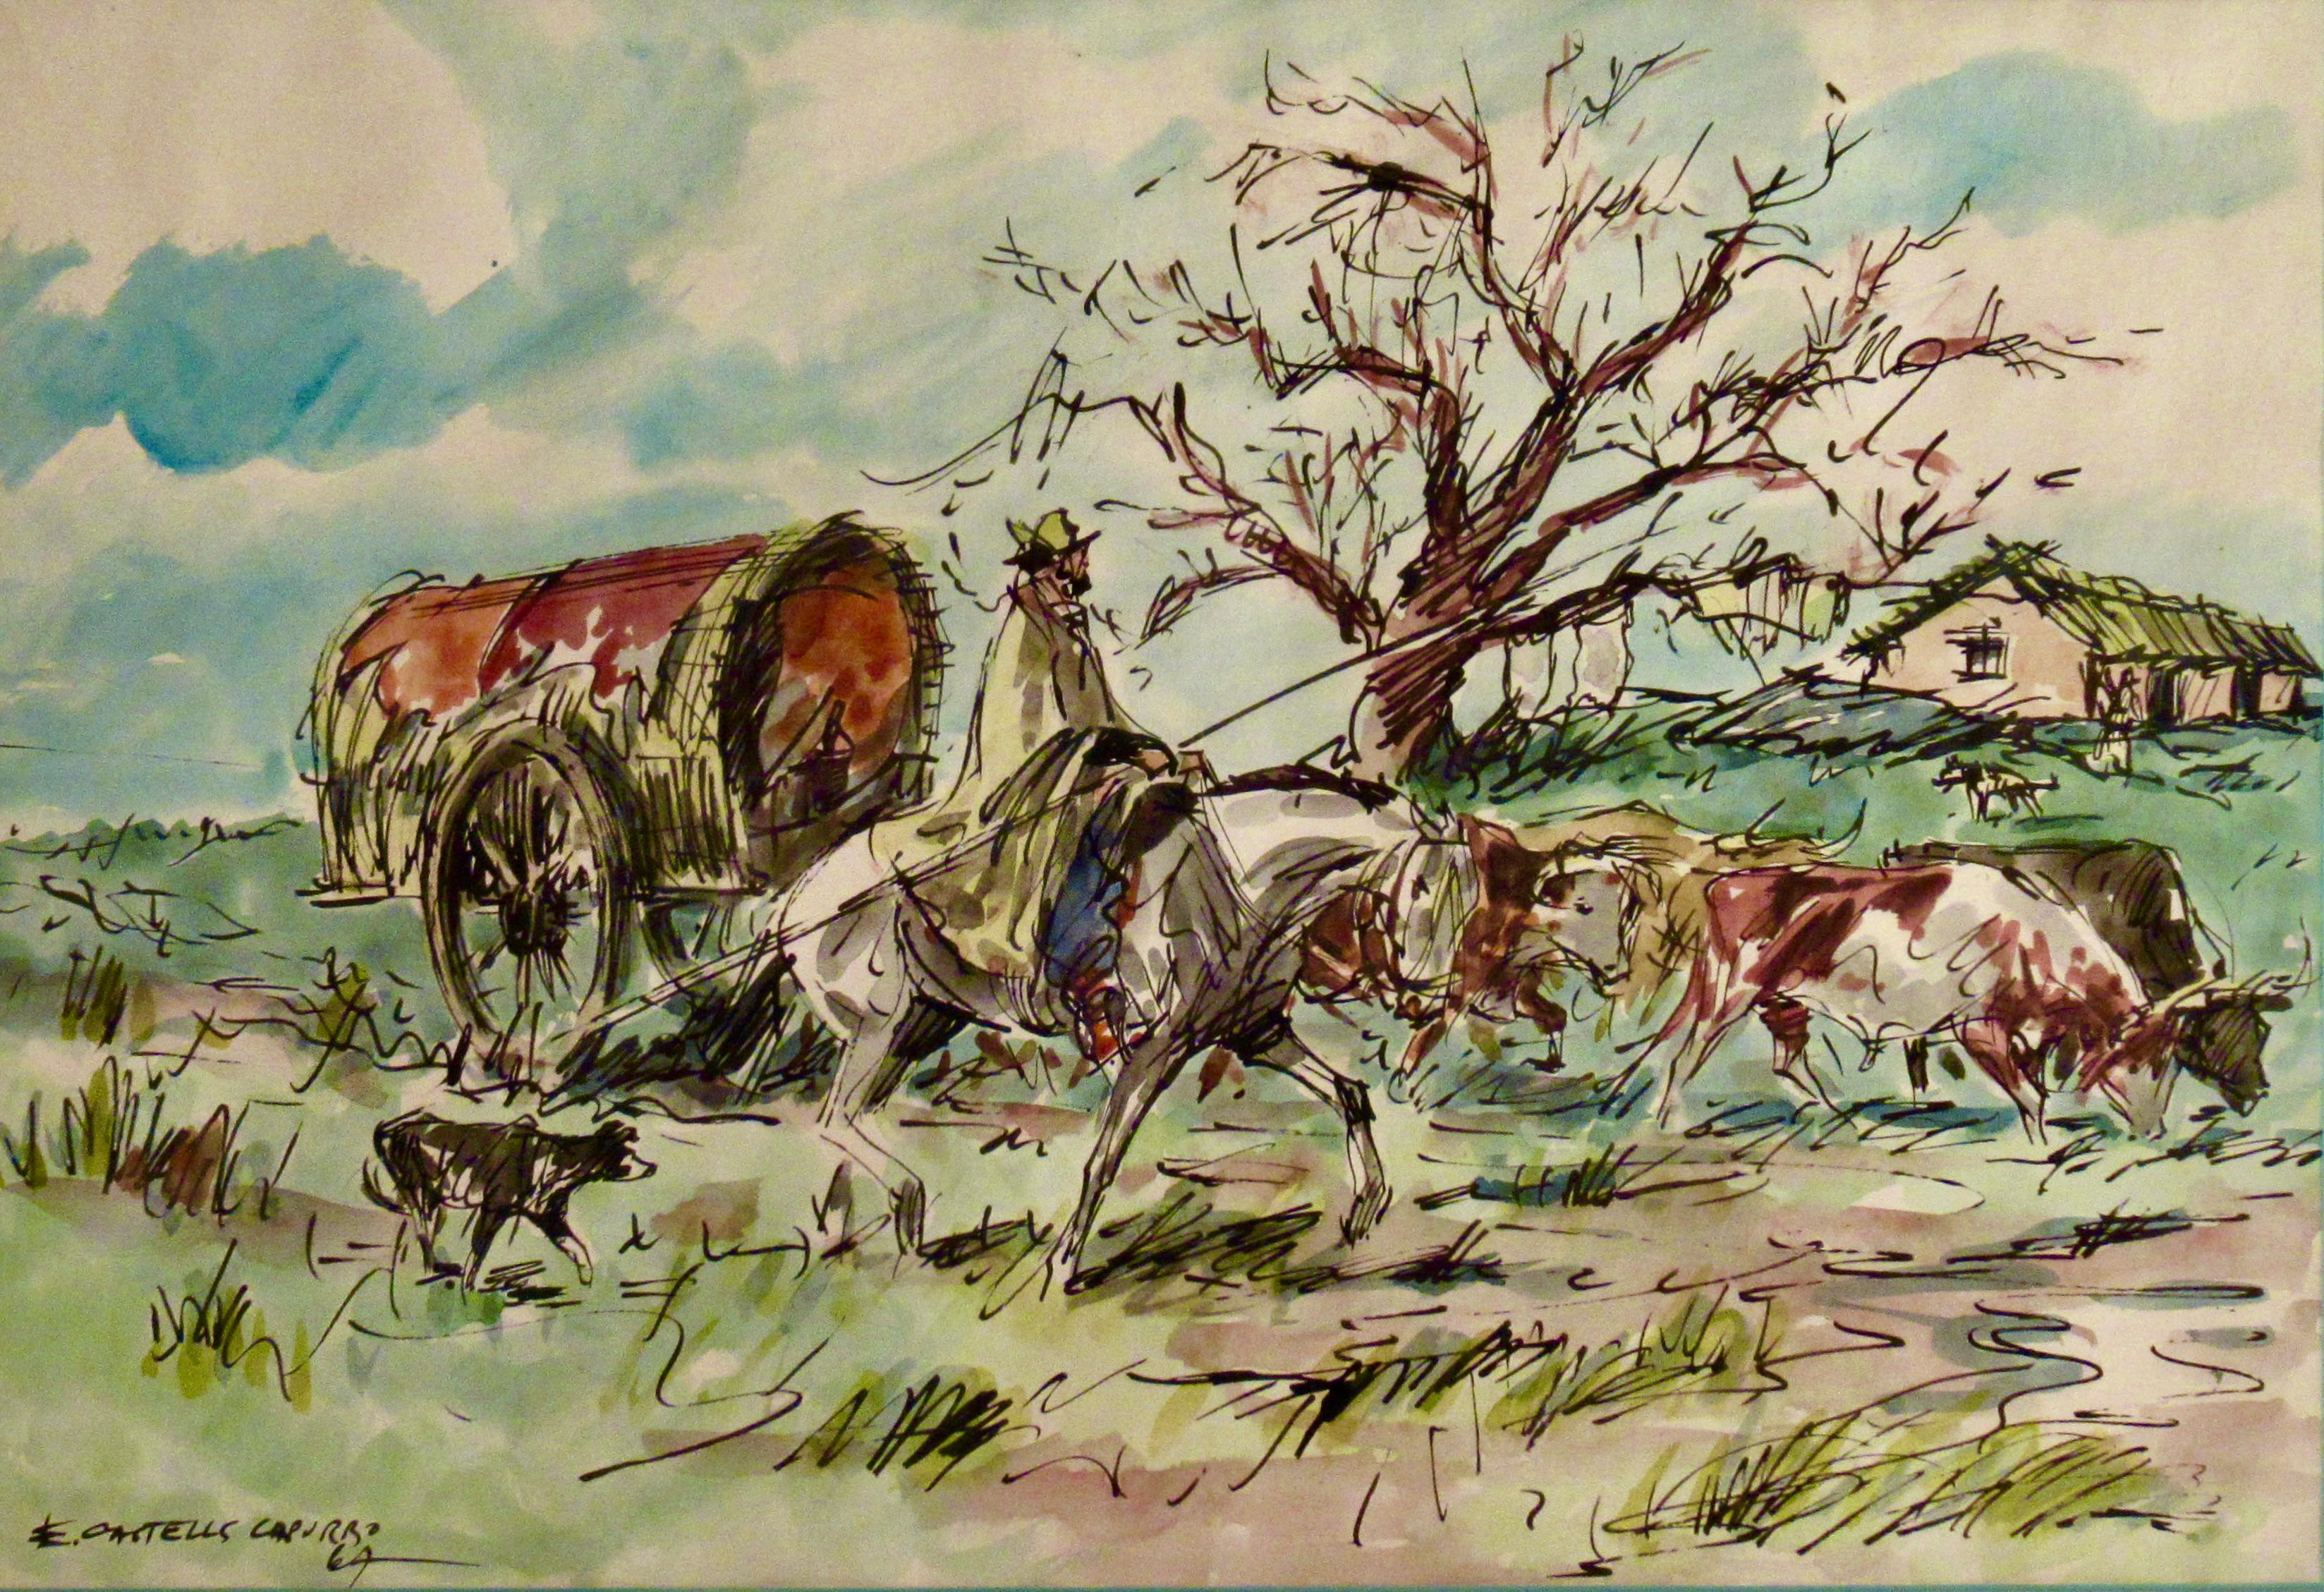 Guiding the Herd - Art by Enrique Castells Capurro